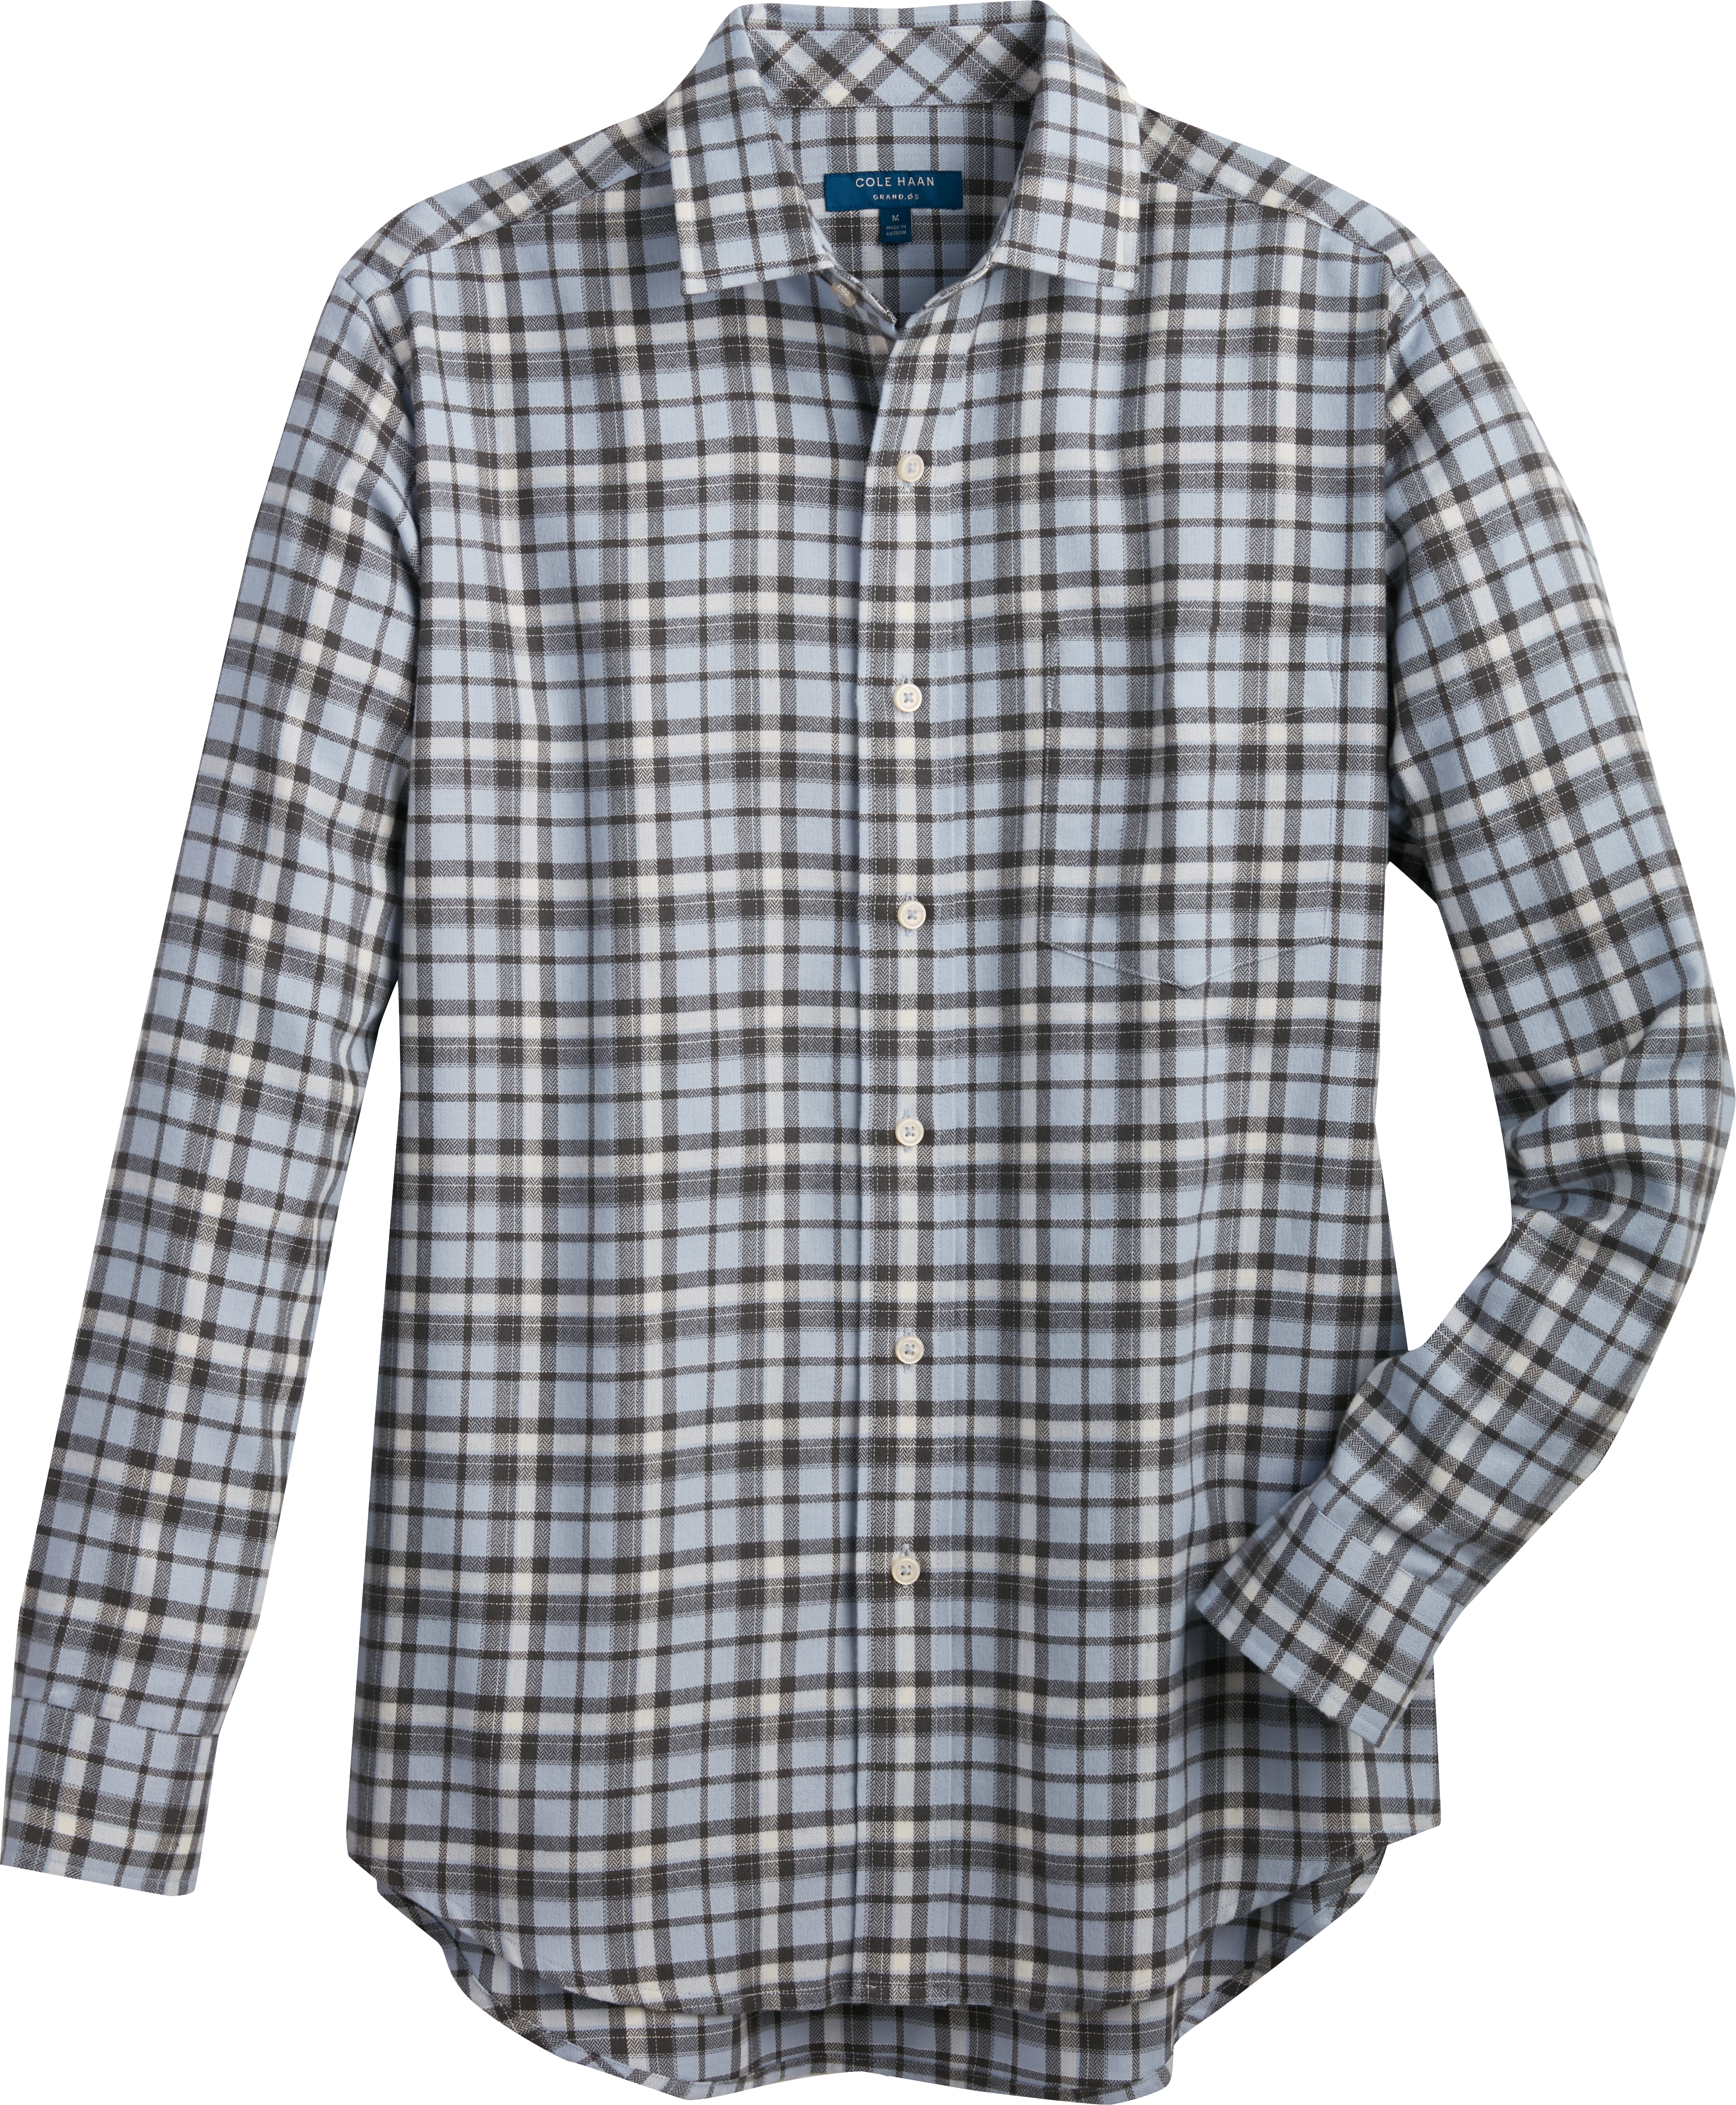 Cole Haan Grand.ØS. Light Blue Plaid Sport Shirt - Men's Shirts | Men's ...